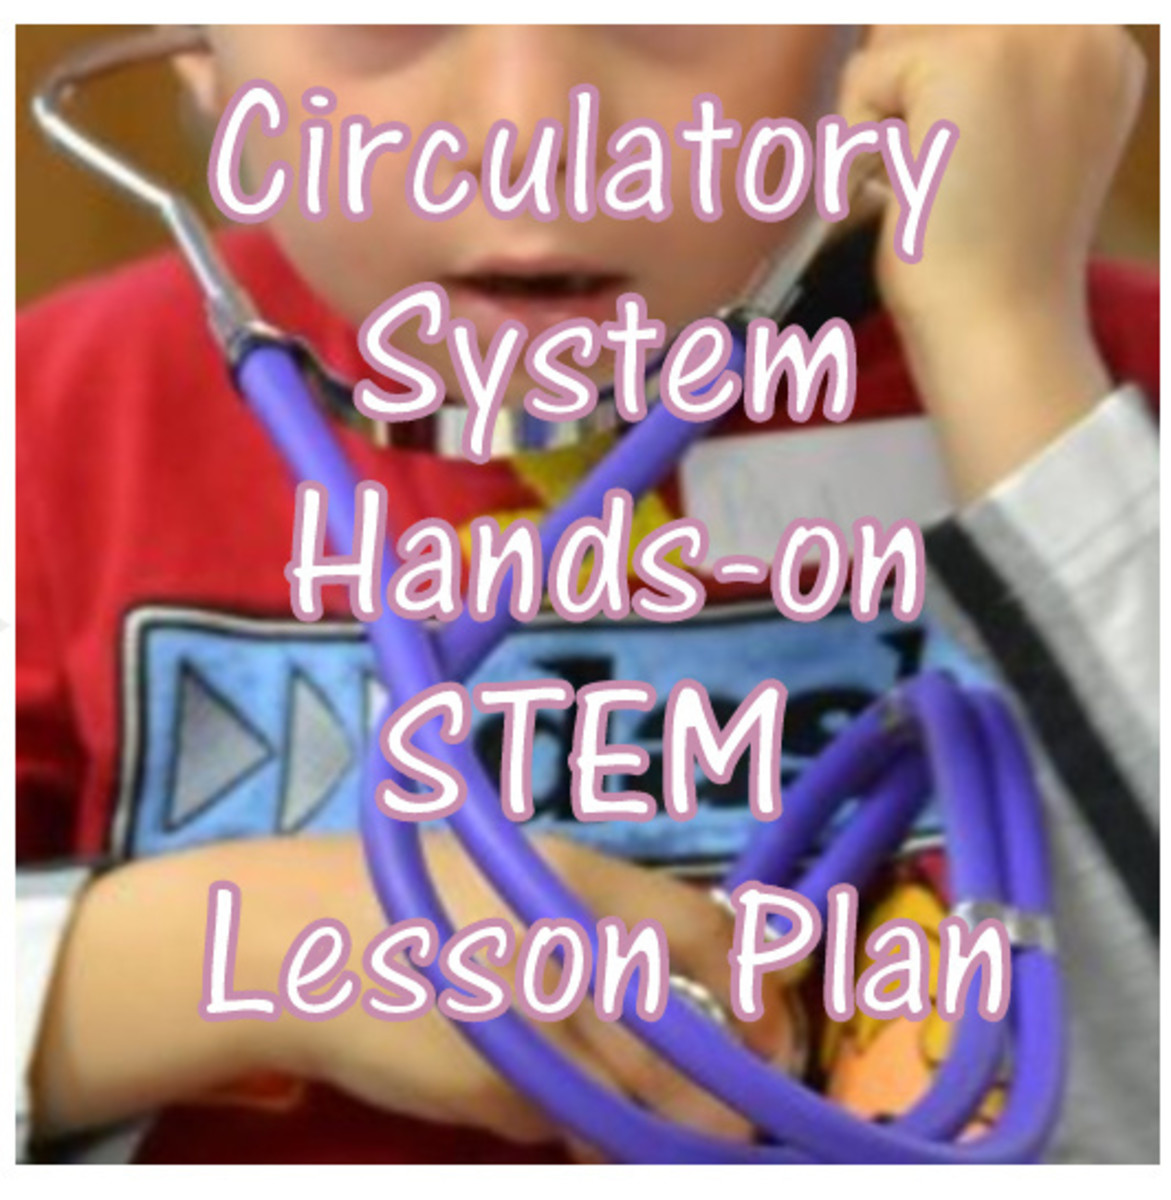 Circulatory System Lesson